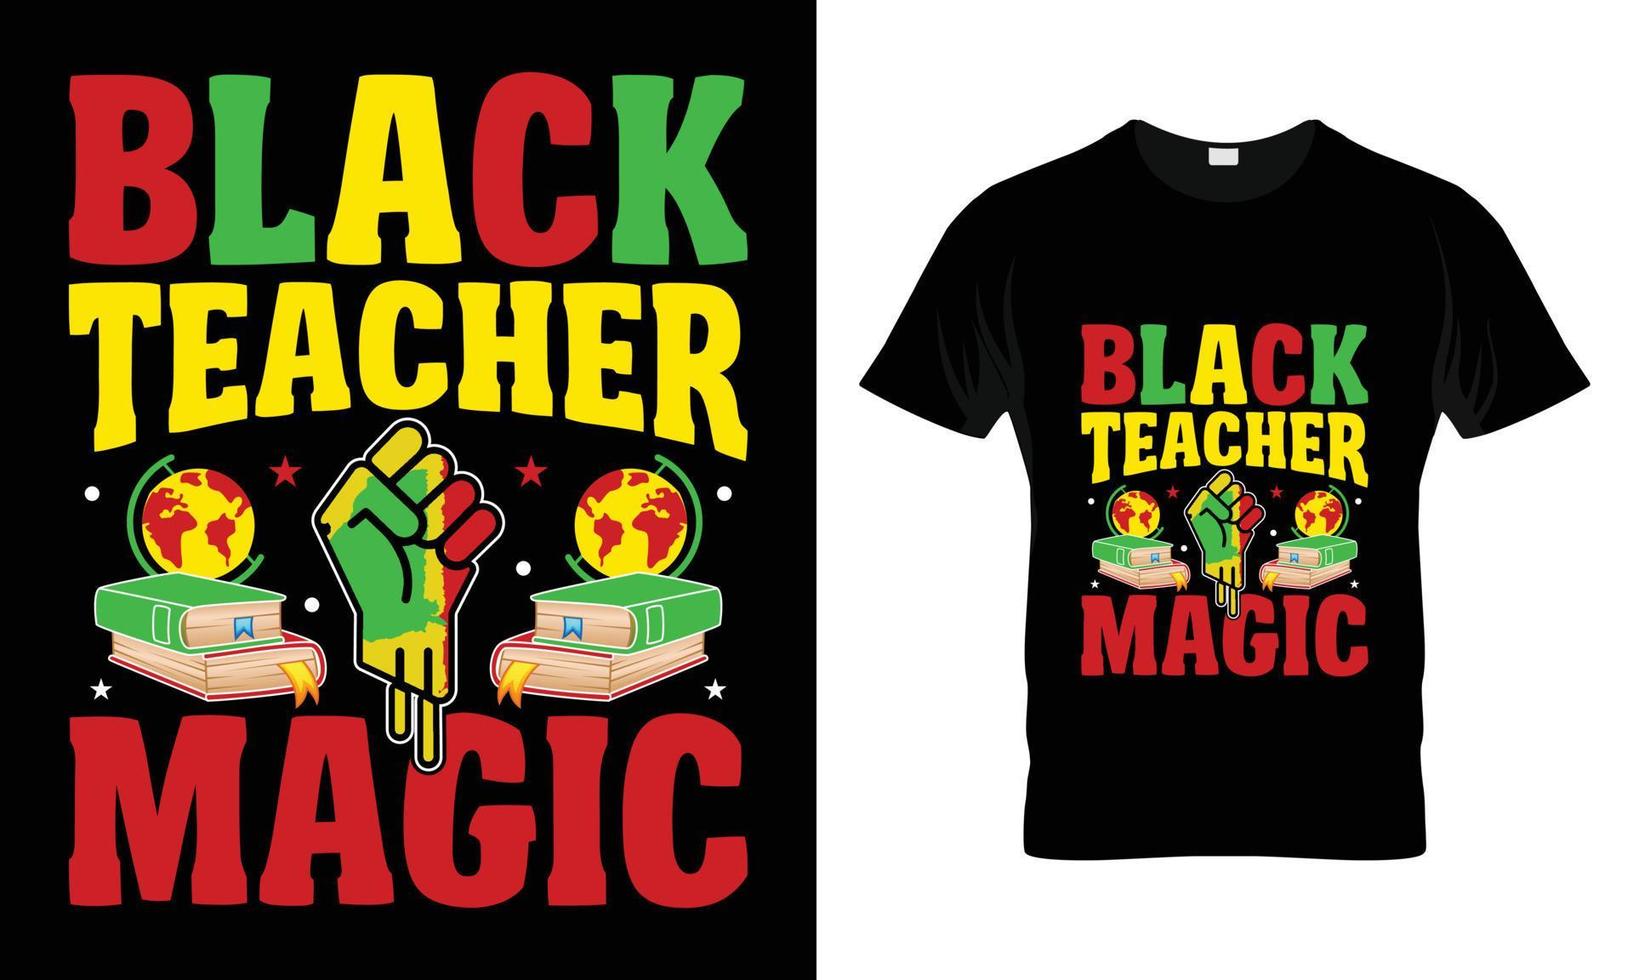 Black teacher magic T-shirt Design vector